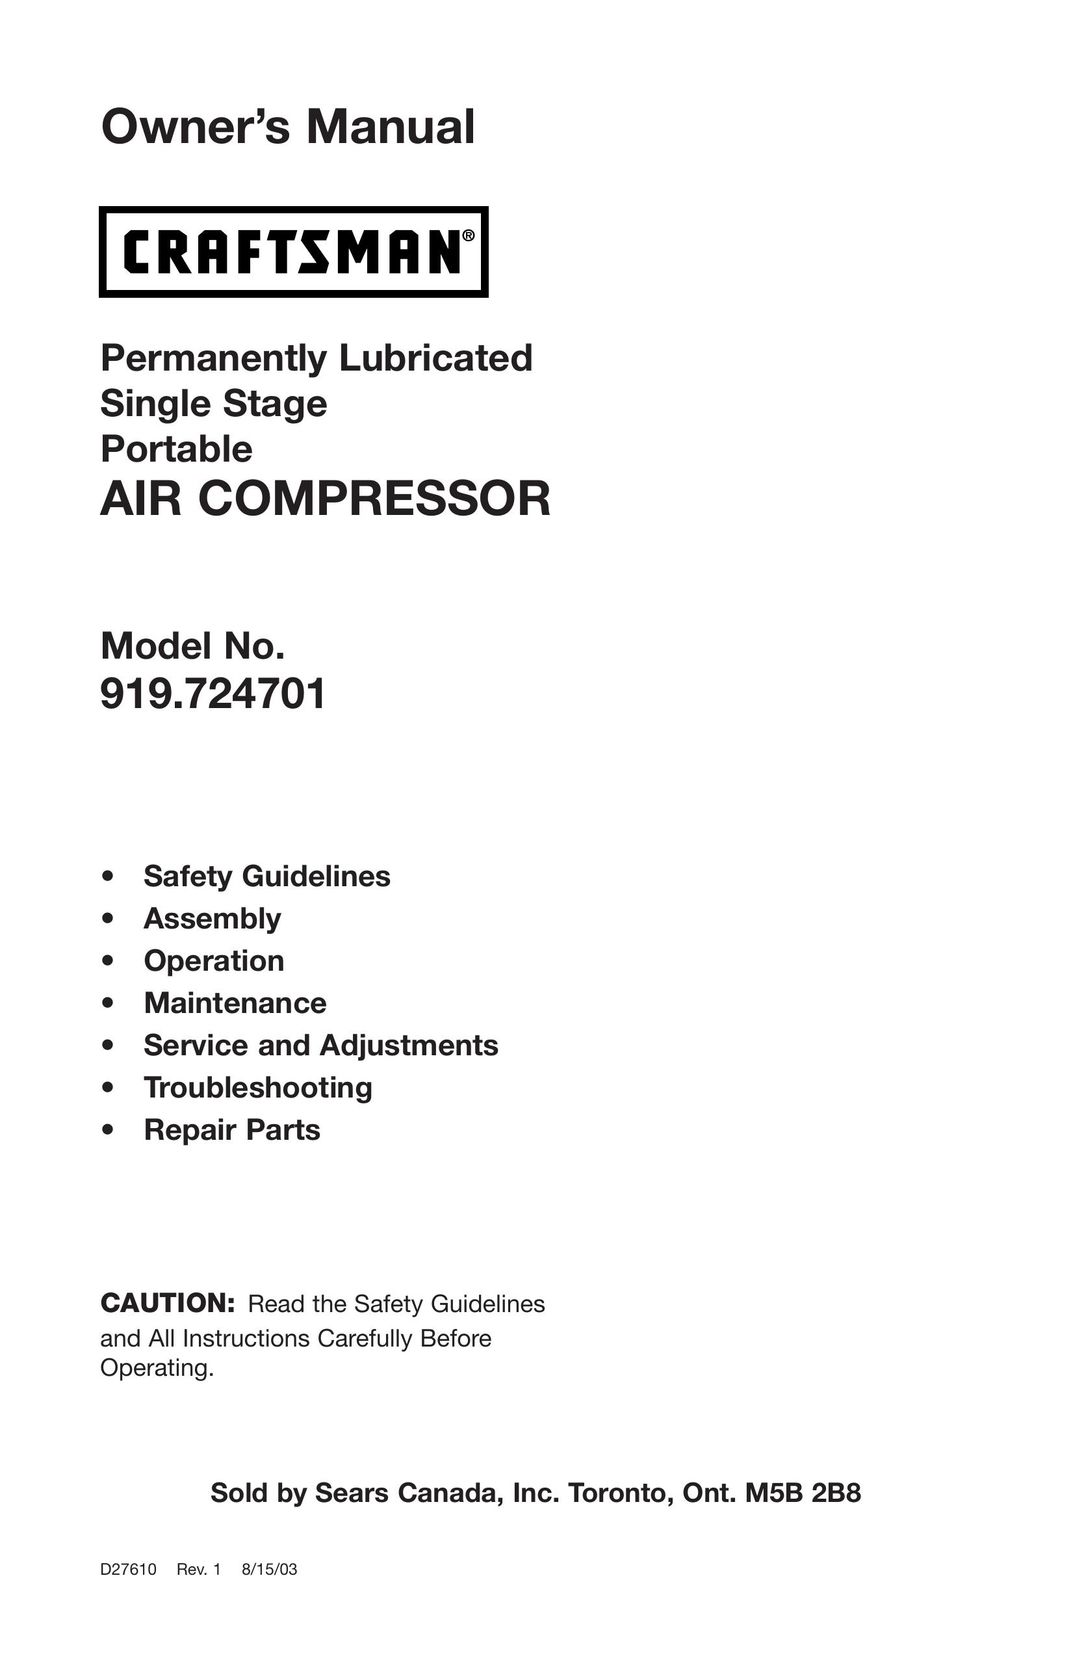 Craftsman 919.724701 Air Compressor User Manual